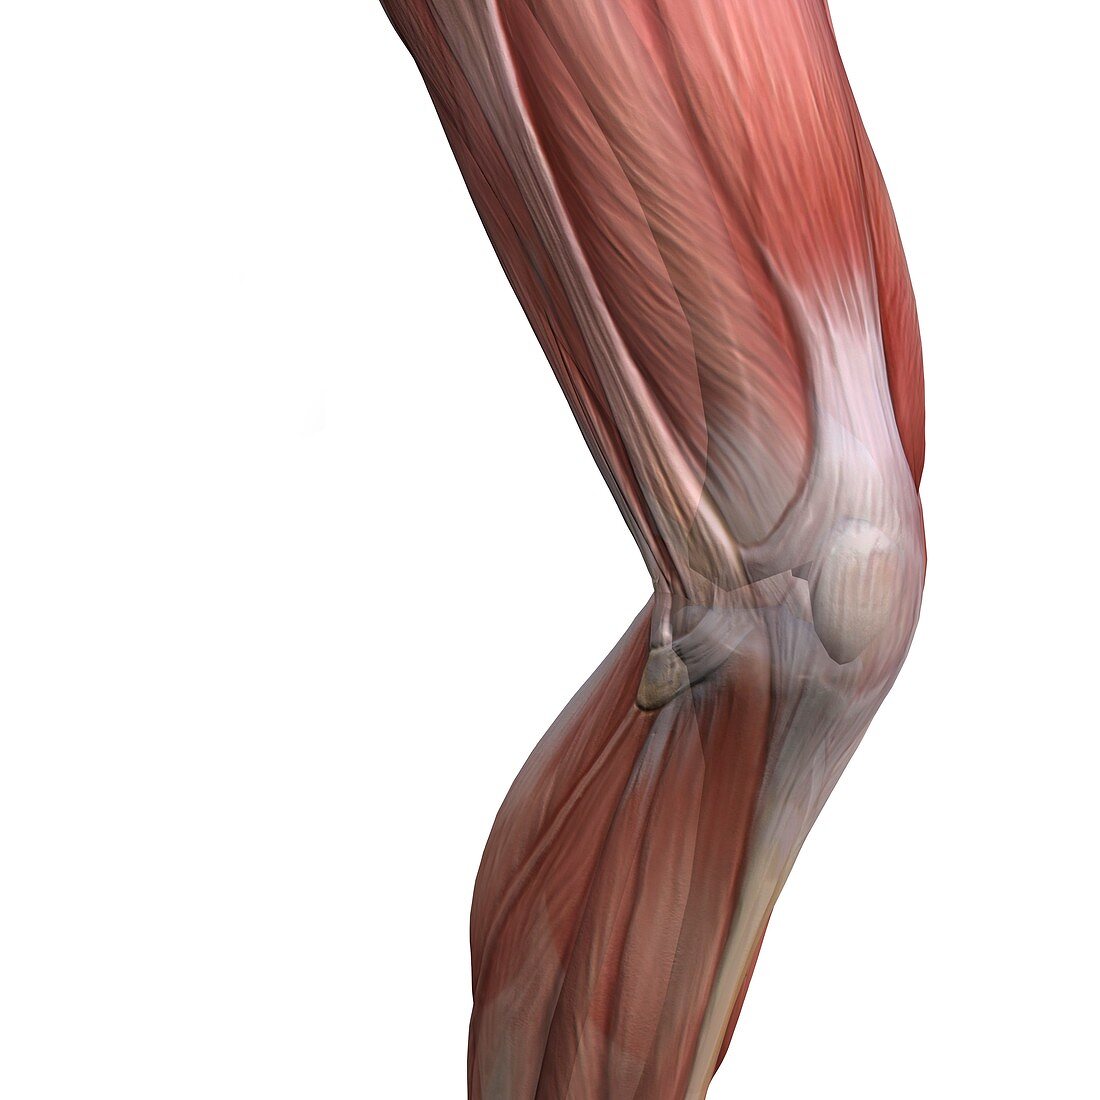 Knee muscles and bones,artwork